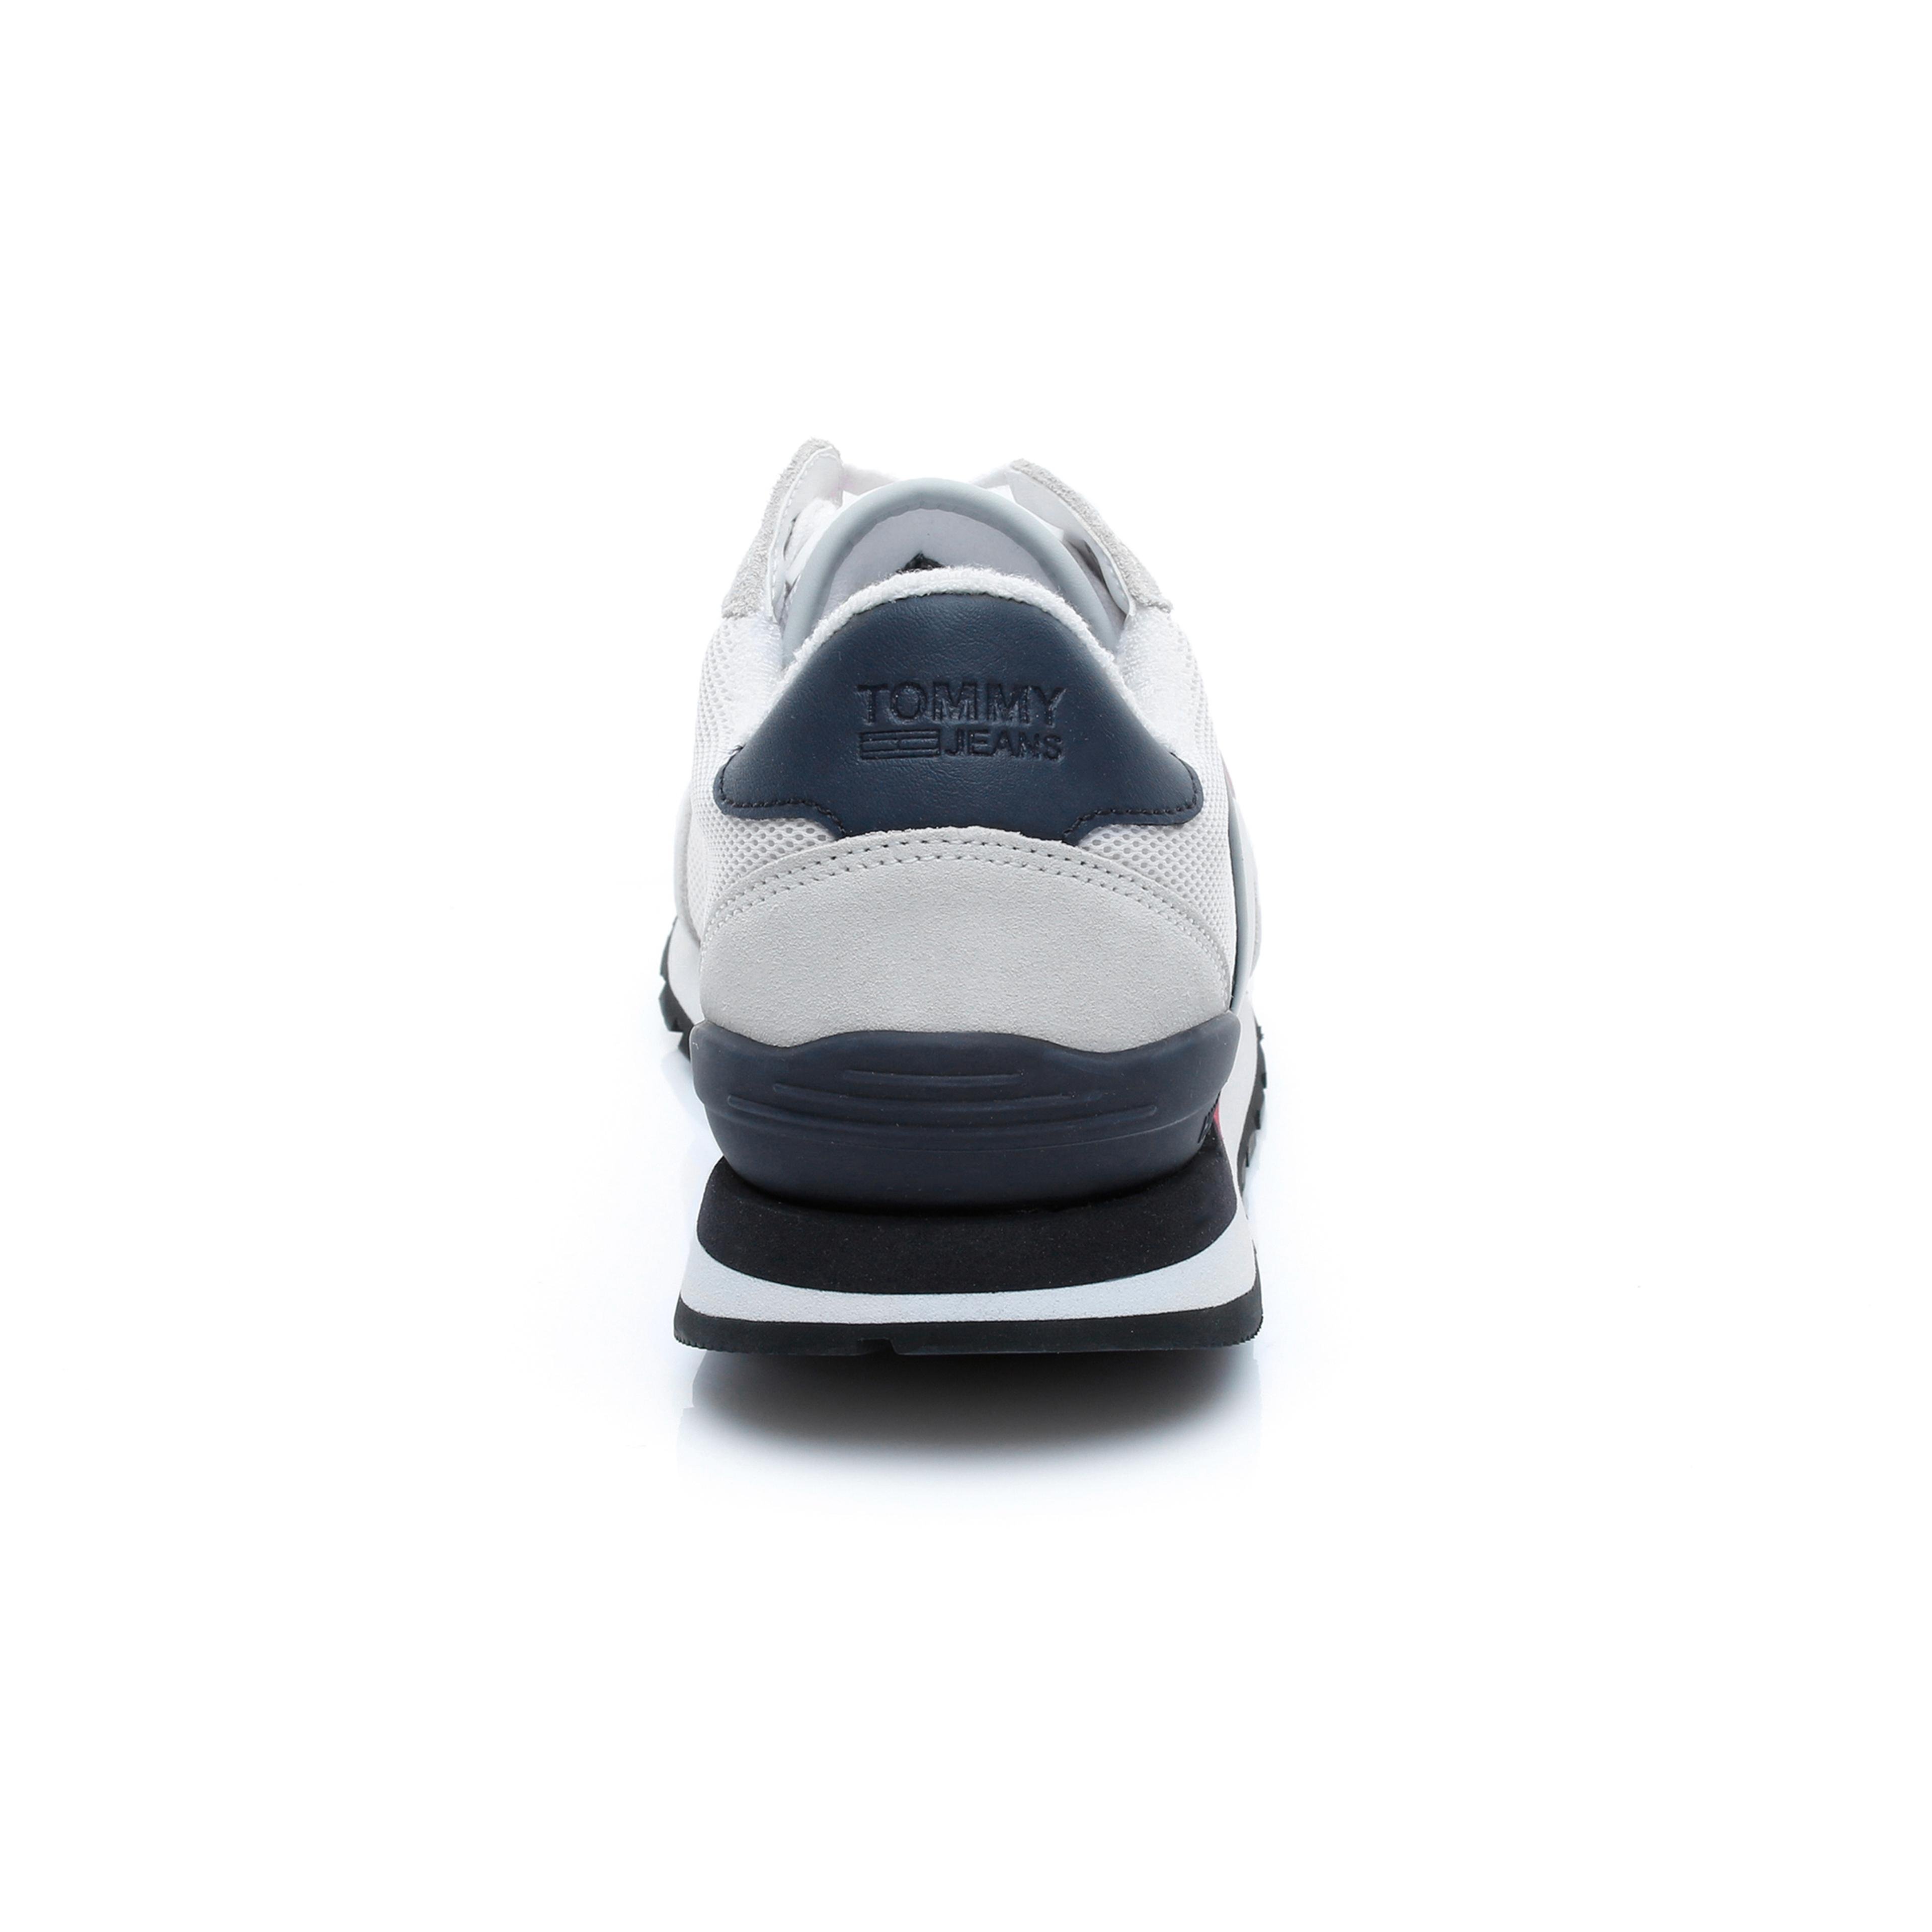 Tommy Hilfiger Casual Jeans's Erkek Beyaz Spor Ayakkabı